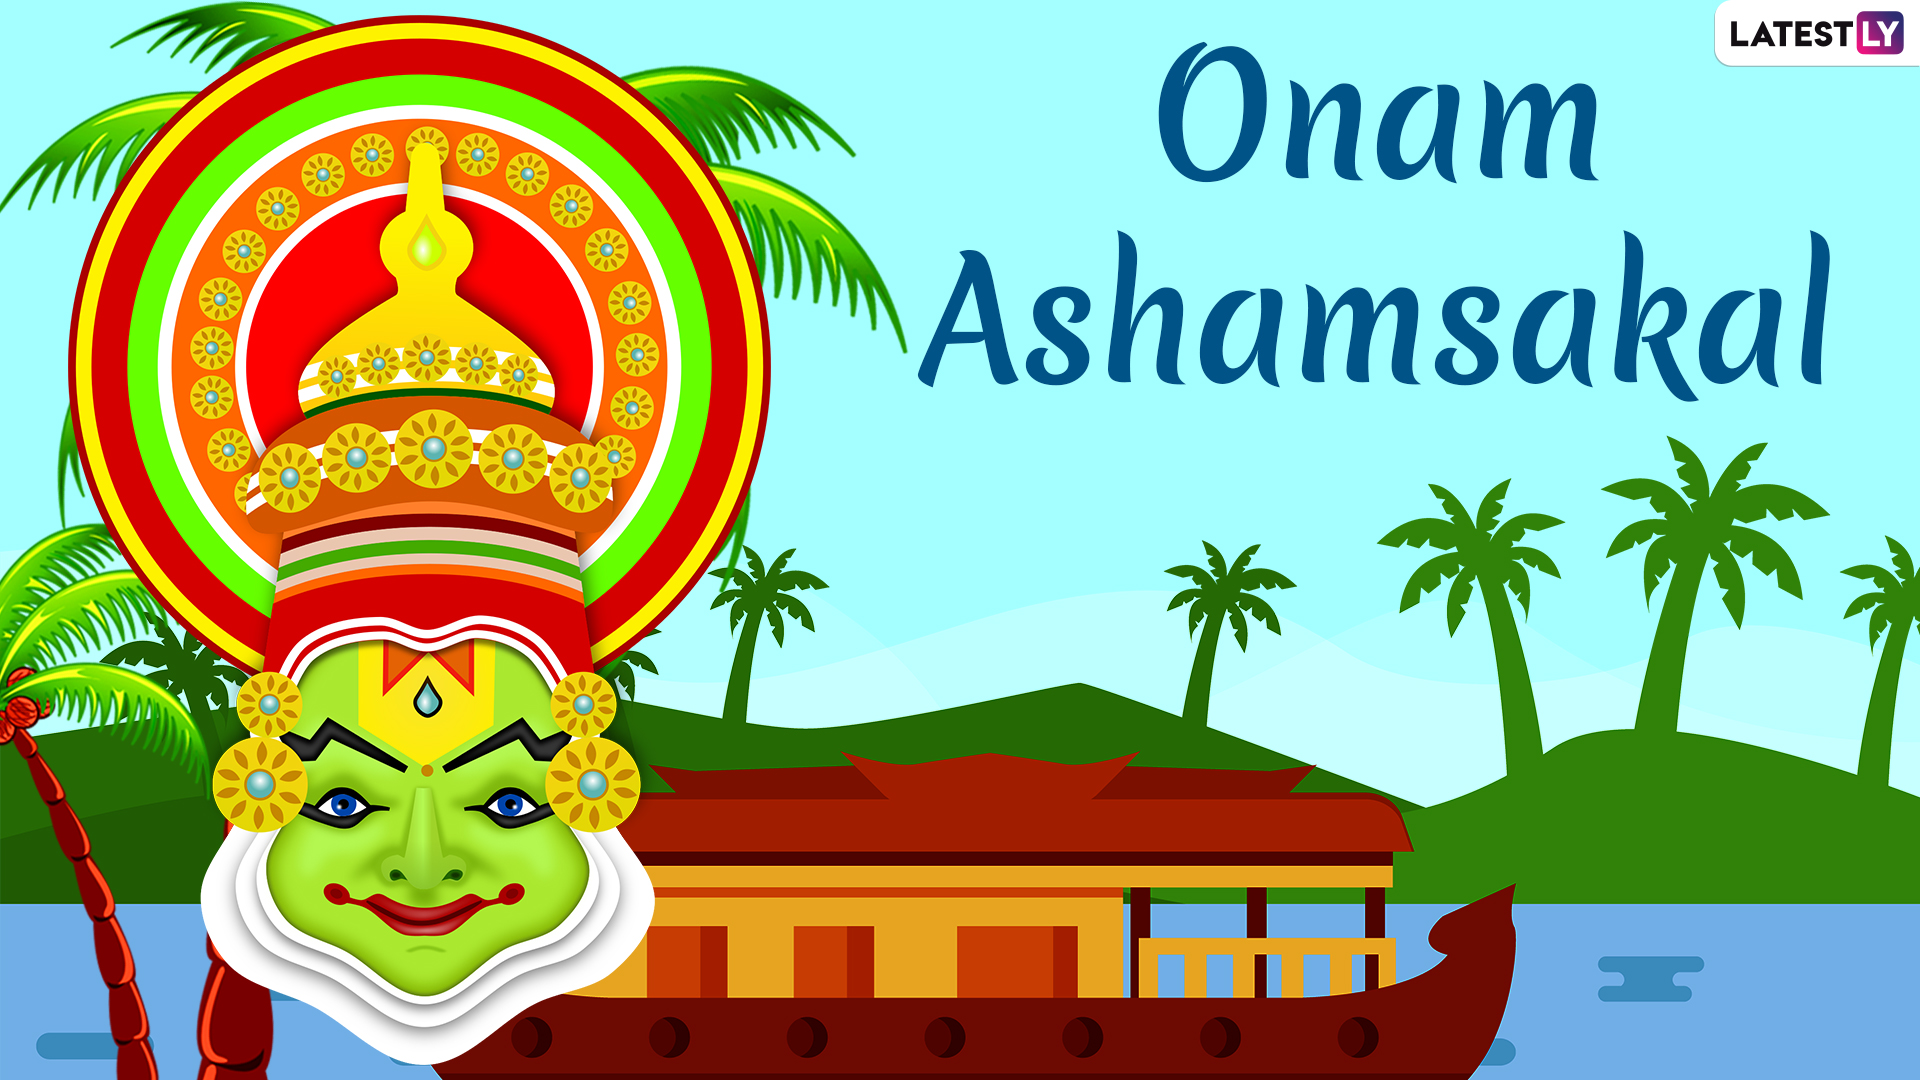 Onam Ashamsakal Images & HD Wallpapers for Free Download ...